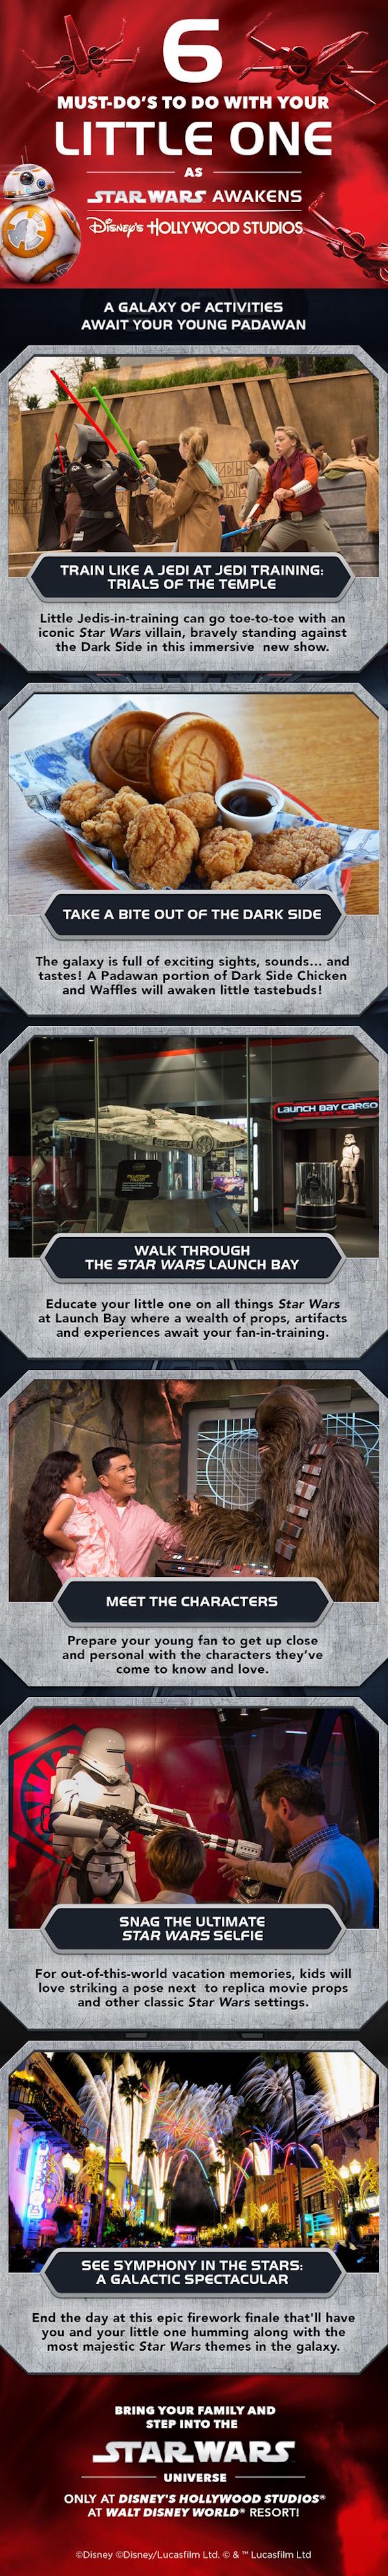 Star Wars Fun For Little Ones This Summer at Walt Disney World Resort